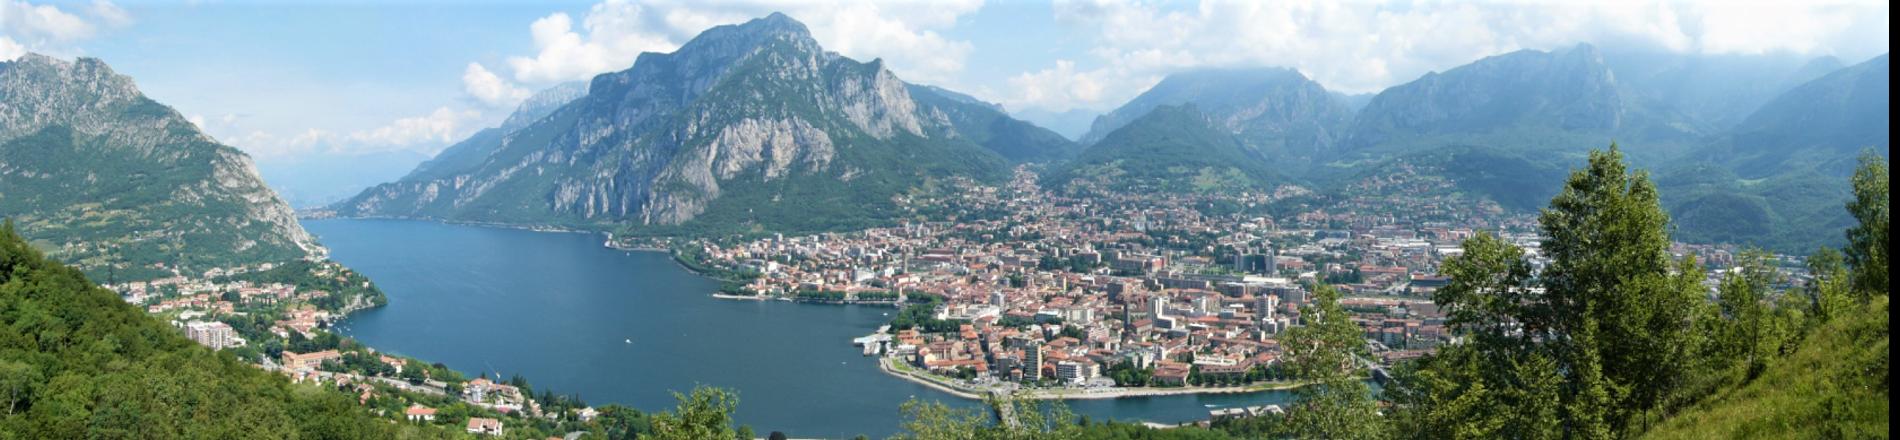 Lombardija – šarm talijanskih jezera